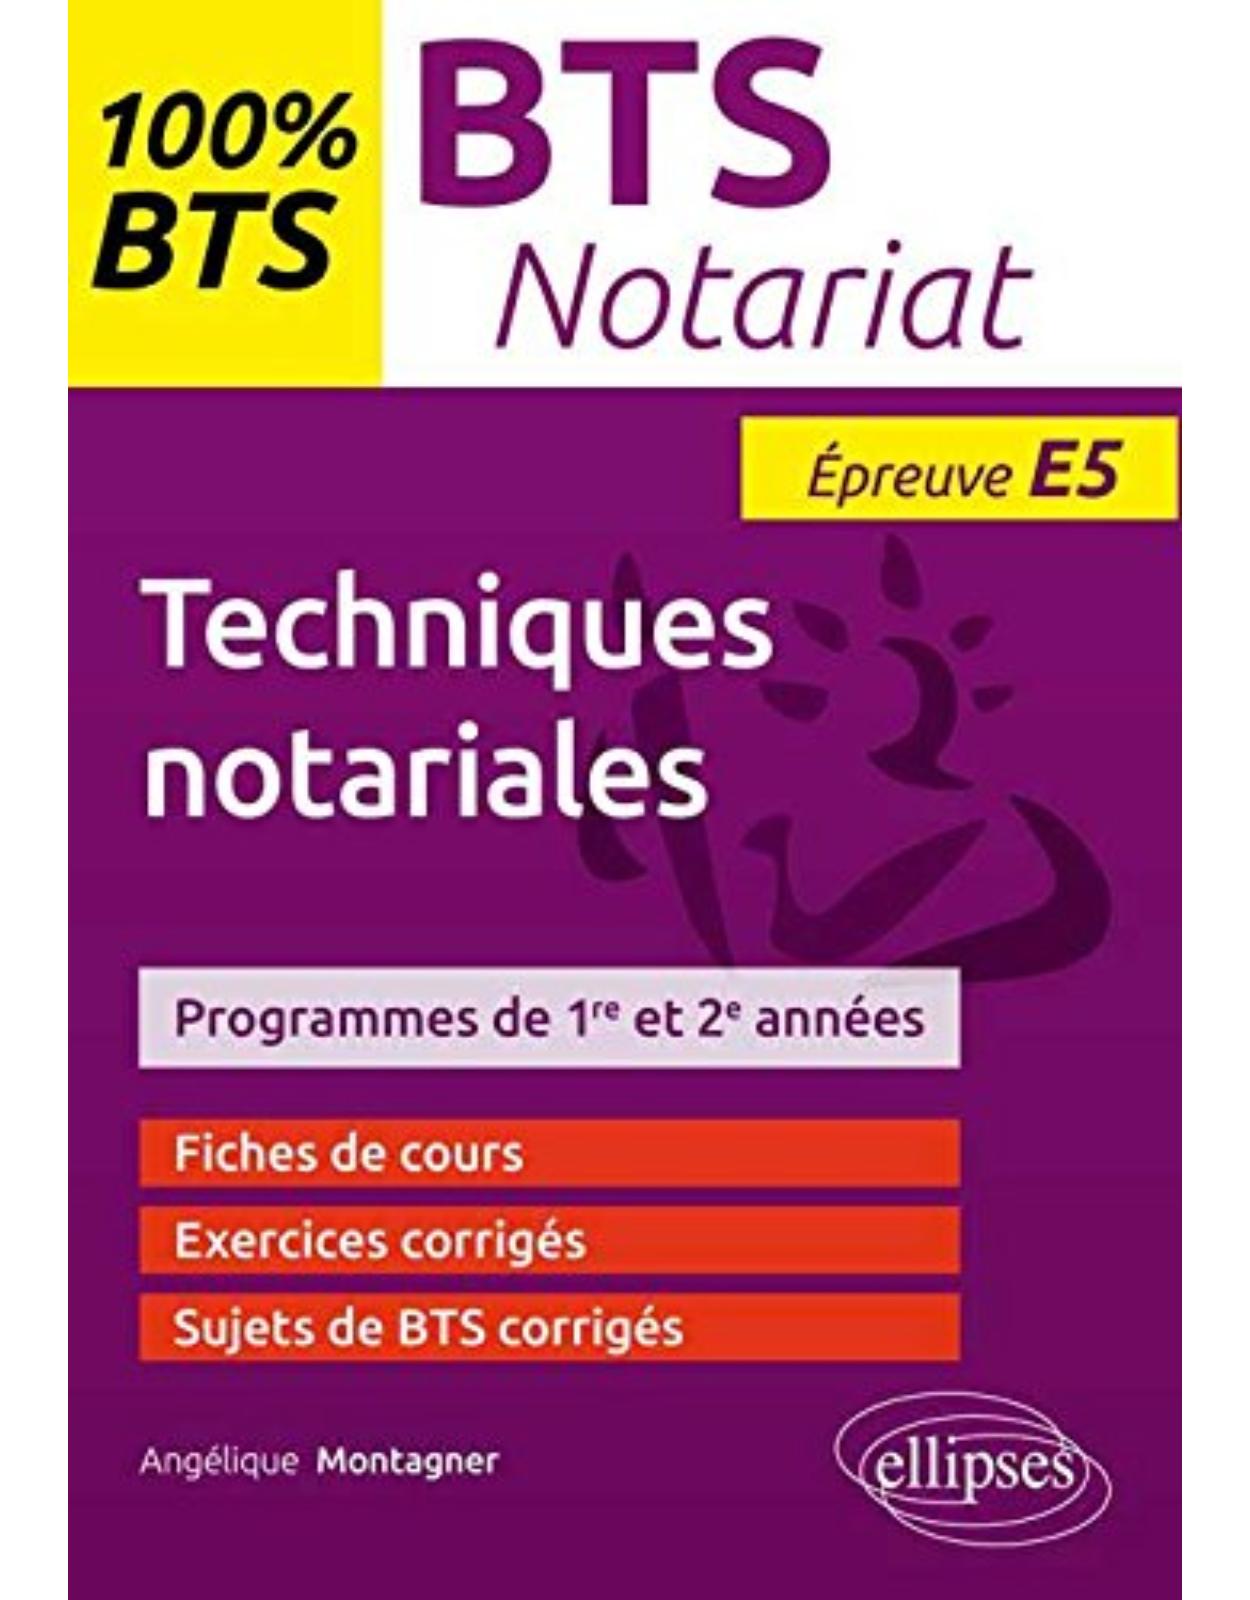 BTS notariat épreuve E5 : Techniques notariales 